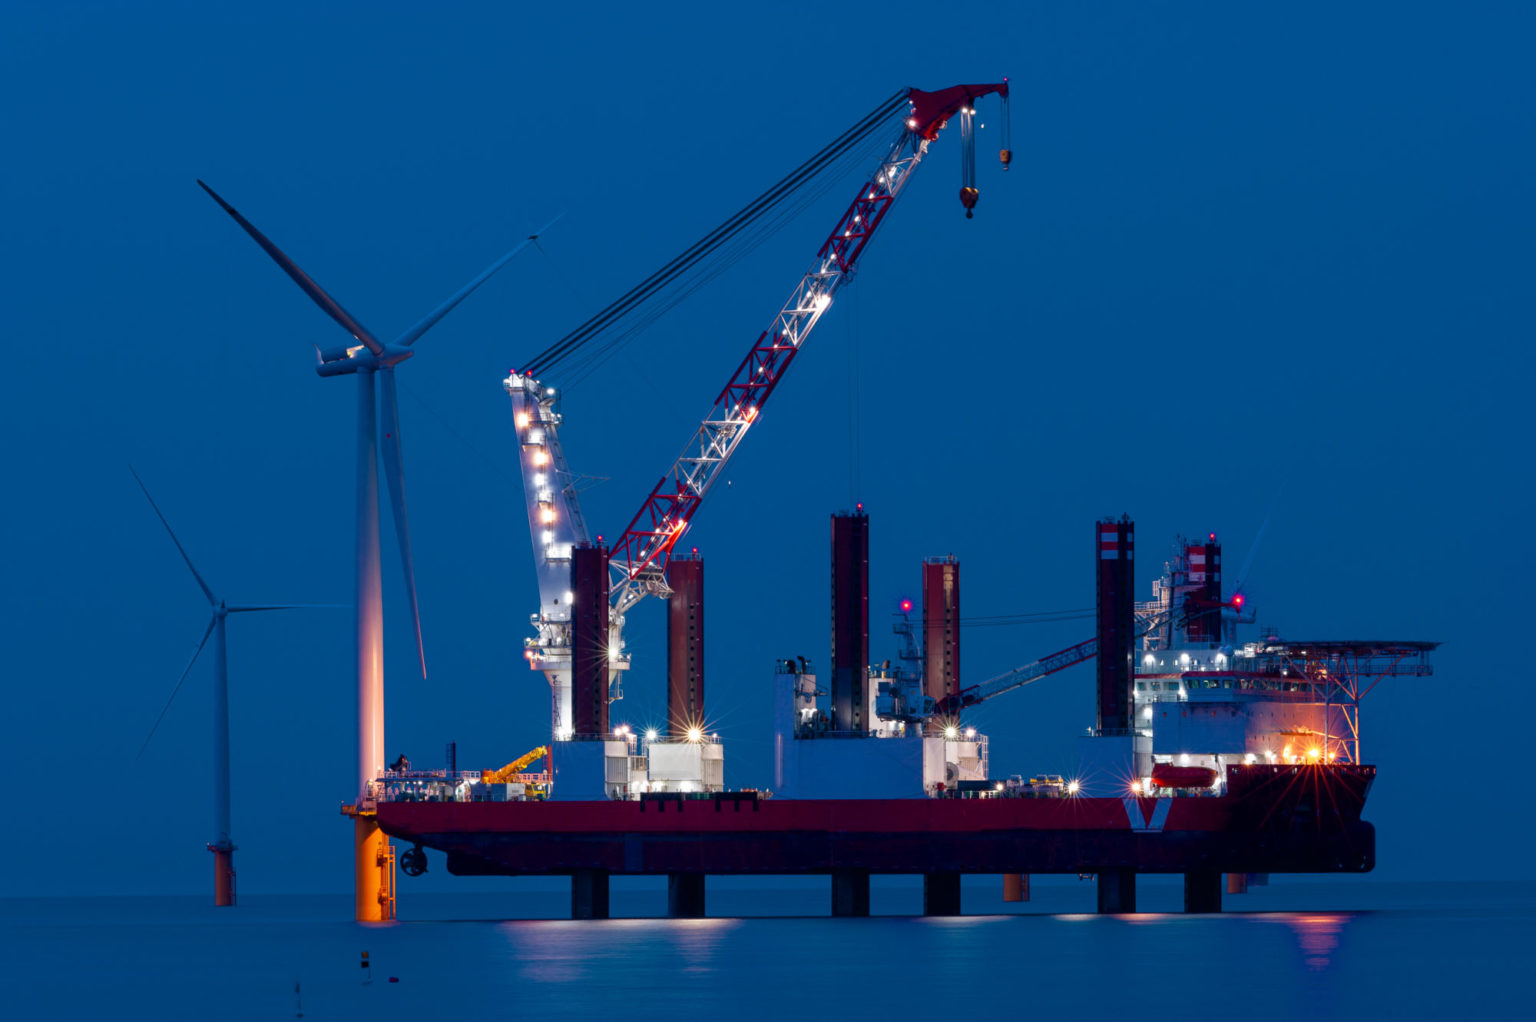 Nattbilde der vi ser opplyst rigg montere vindturbiner til havs.